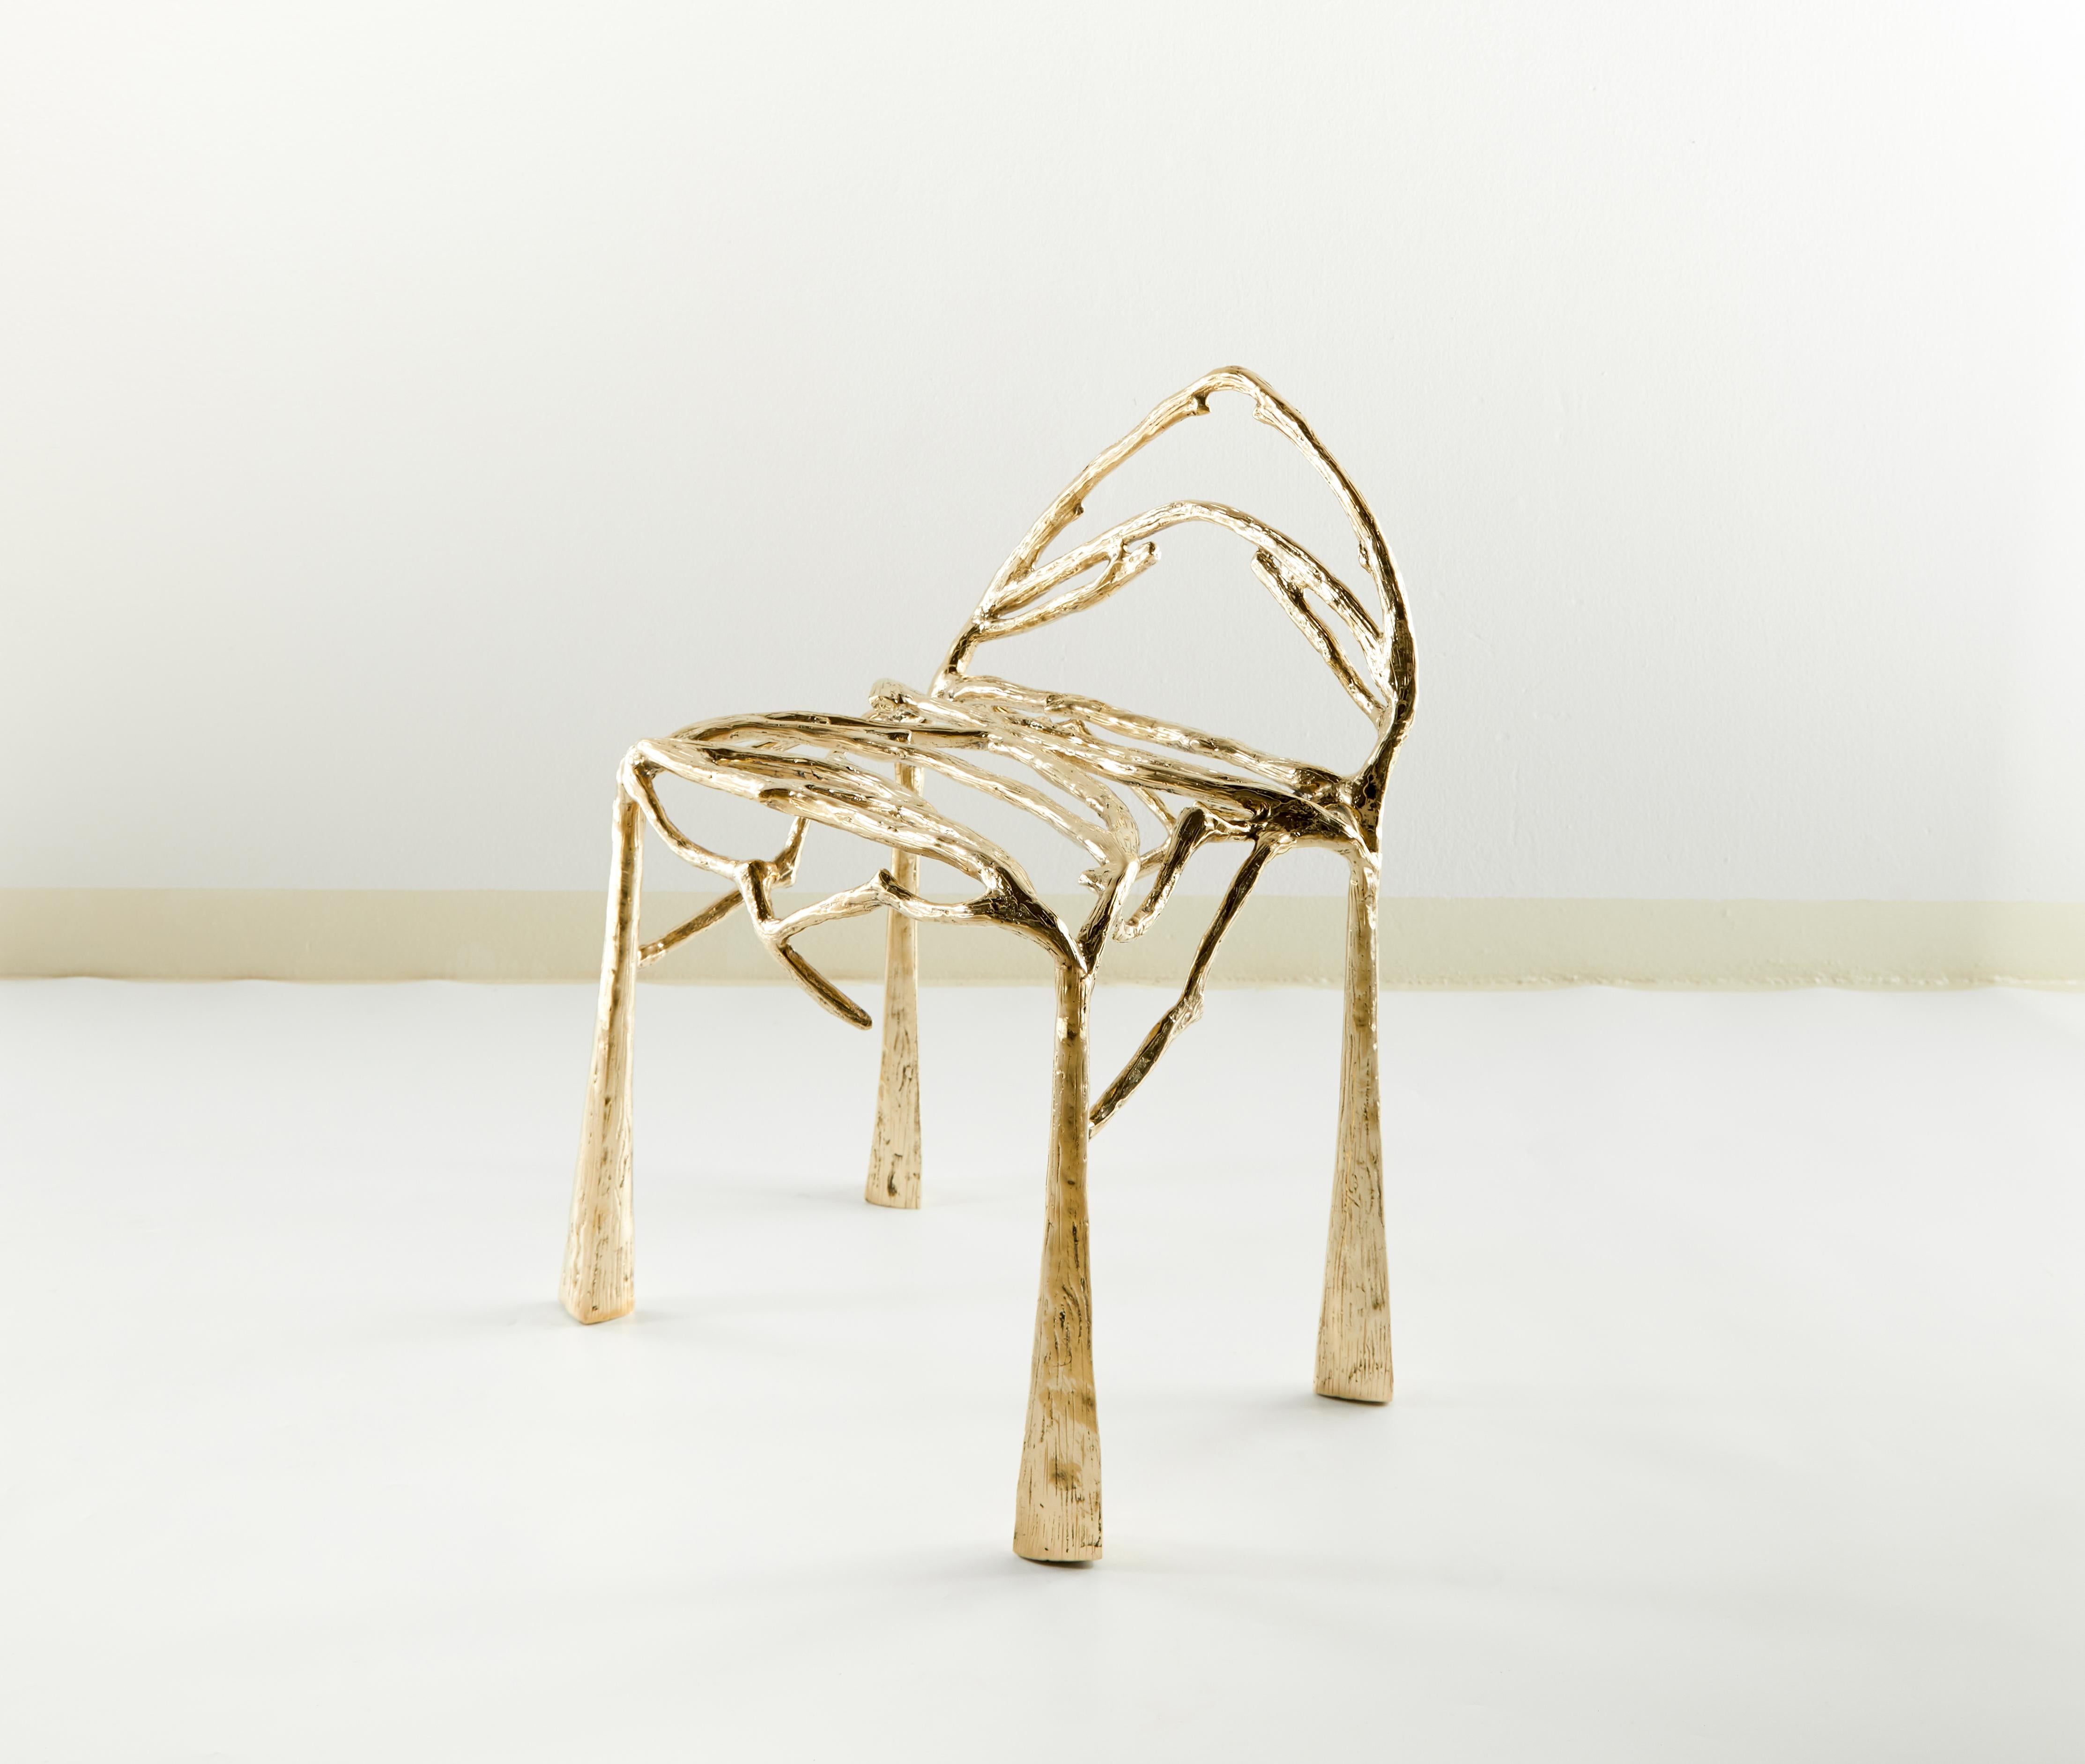 Chair by Masaya
Dimensions: 65 x 53 x 50 cm
Brass
Handsculpted.
 